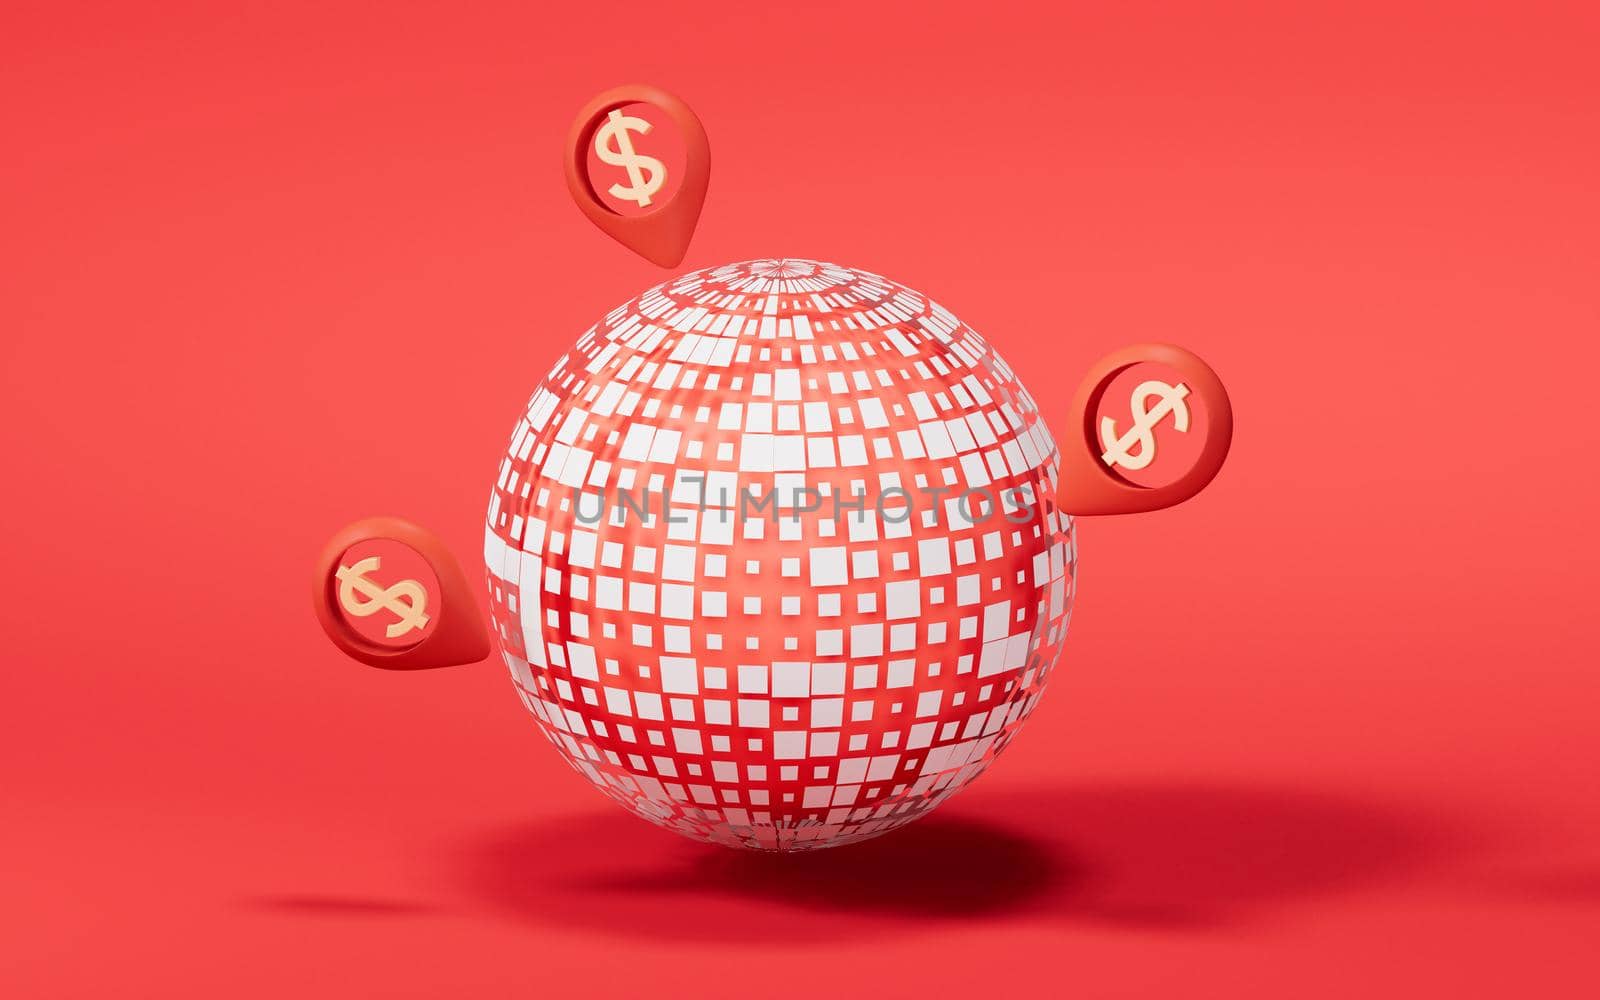 Digital data sphere with money mark, 3d rendering. by vinkfan